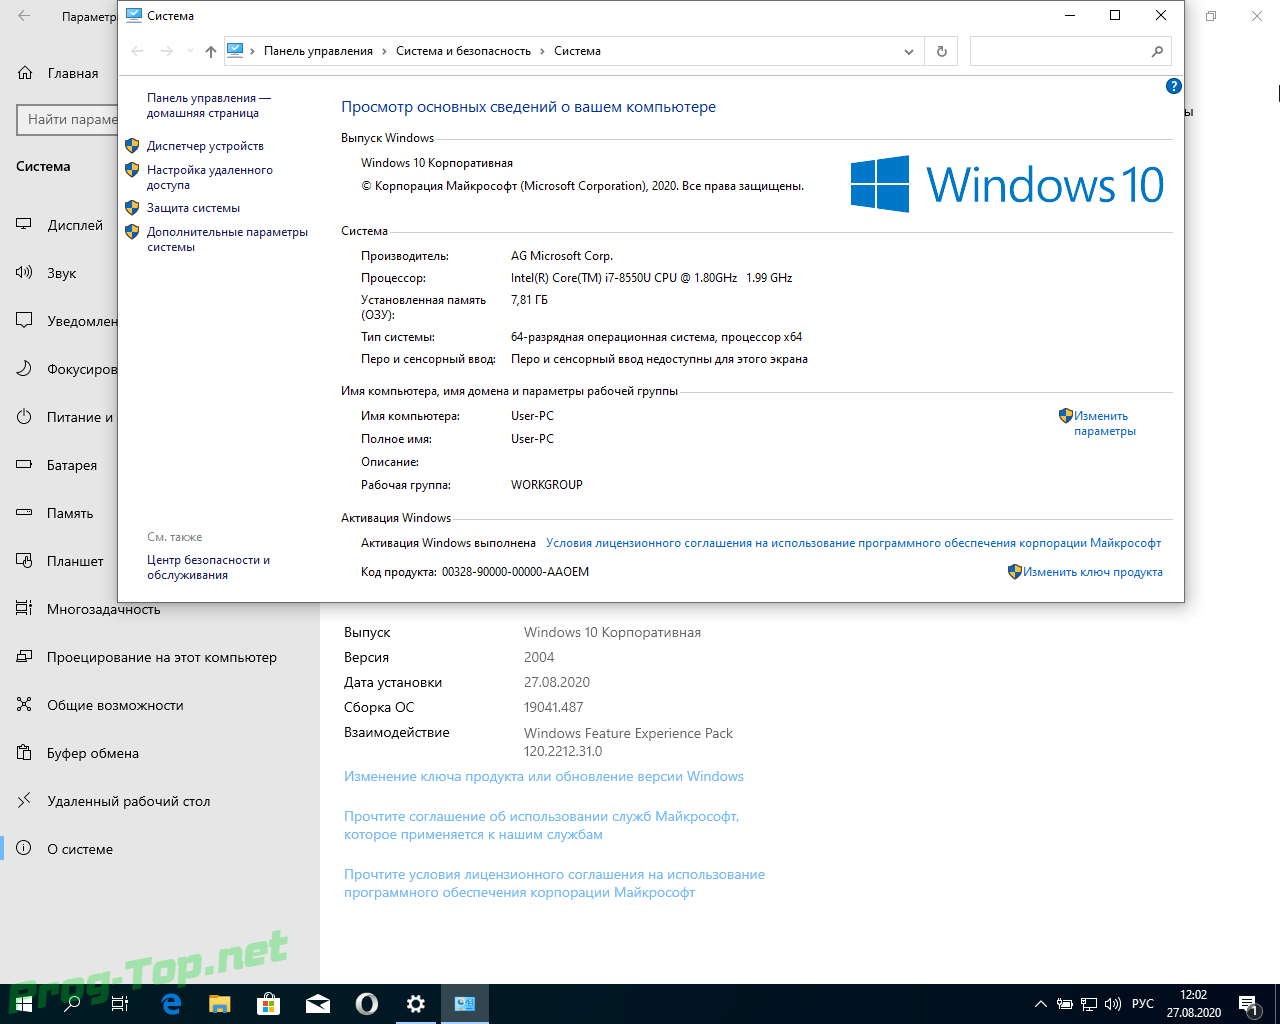 Сборка windows 2020. Виндовс 10 корпоративная. Windows 10 корпоративная LTSC. Windows 10 корпоративная 2020. Windows 10 LTSC 2020.